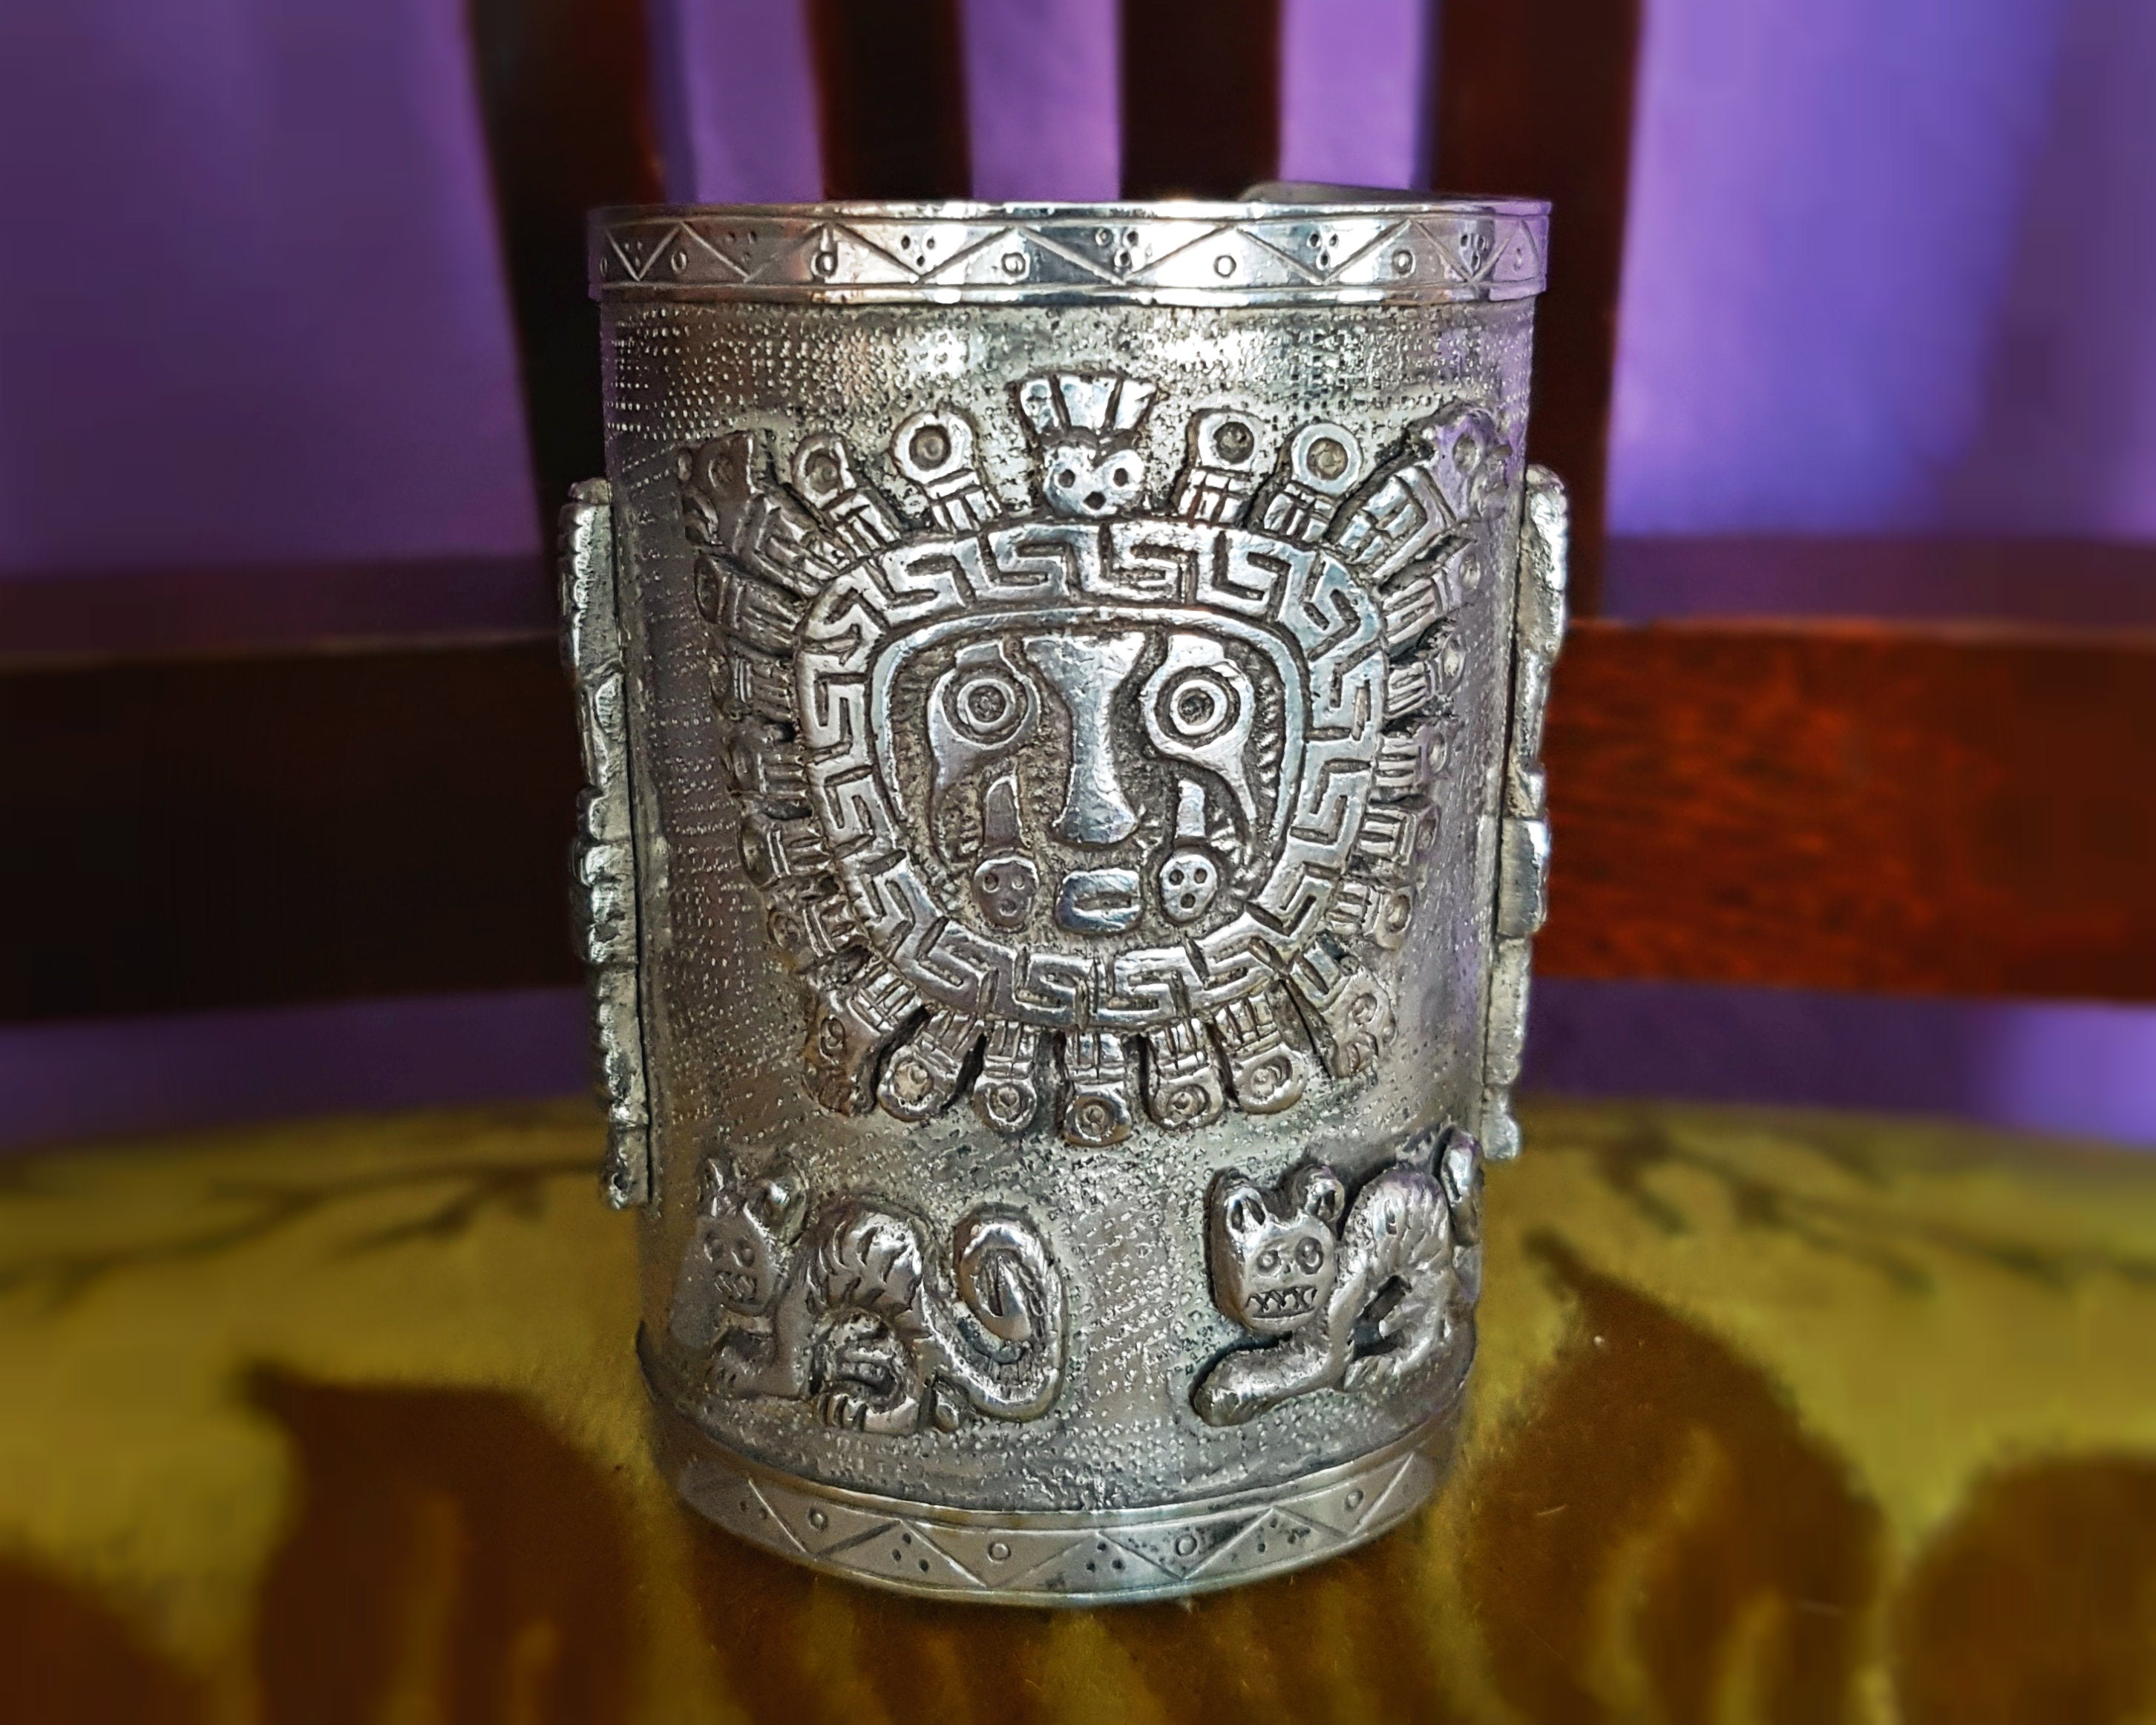 Large Peruvian Sterling Silver Cuff Bracelet